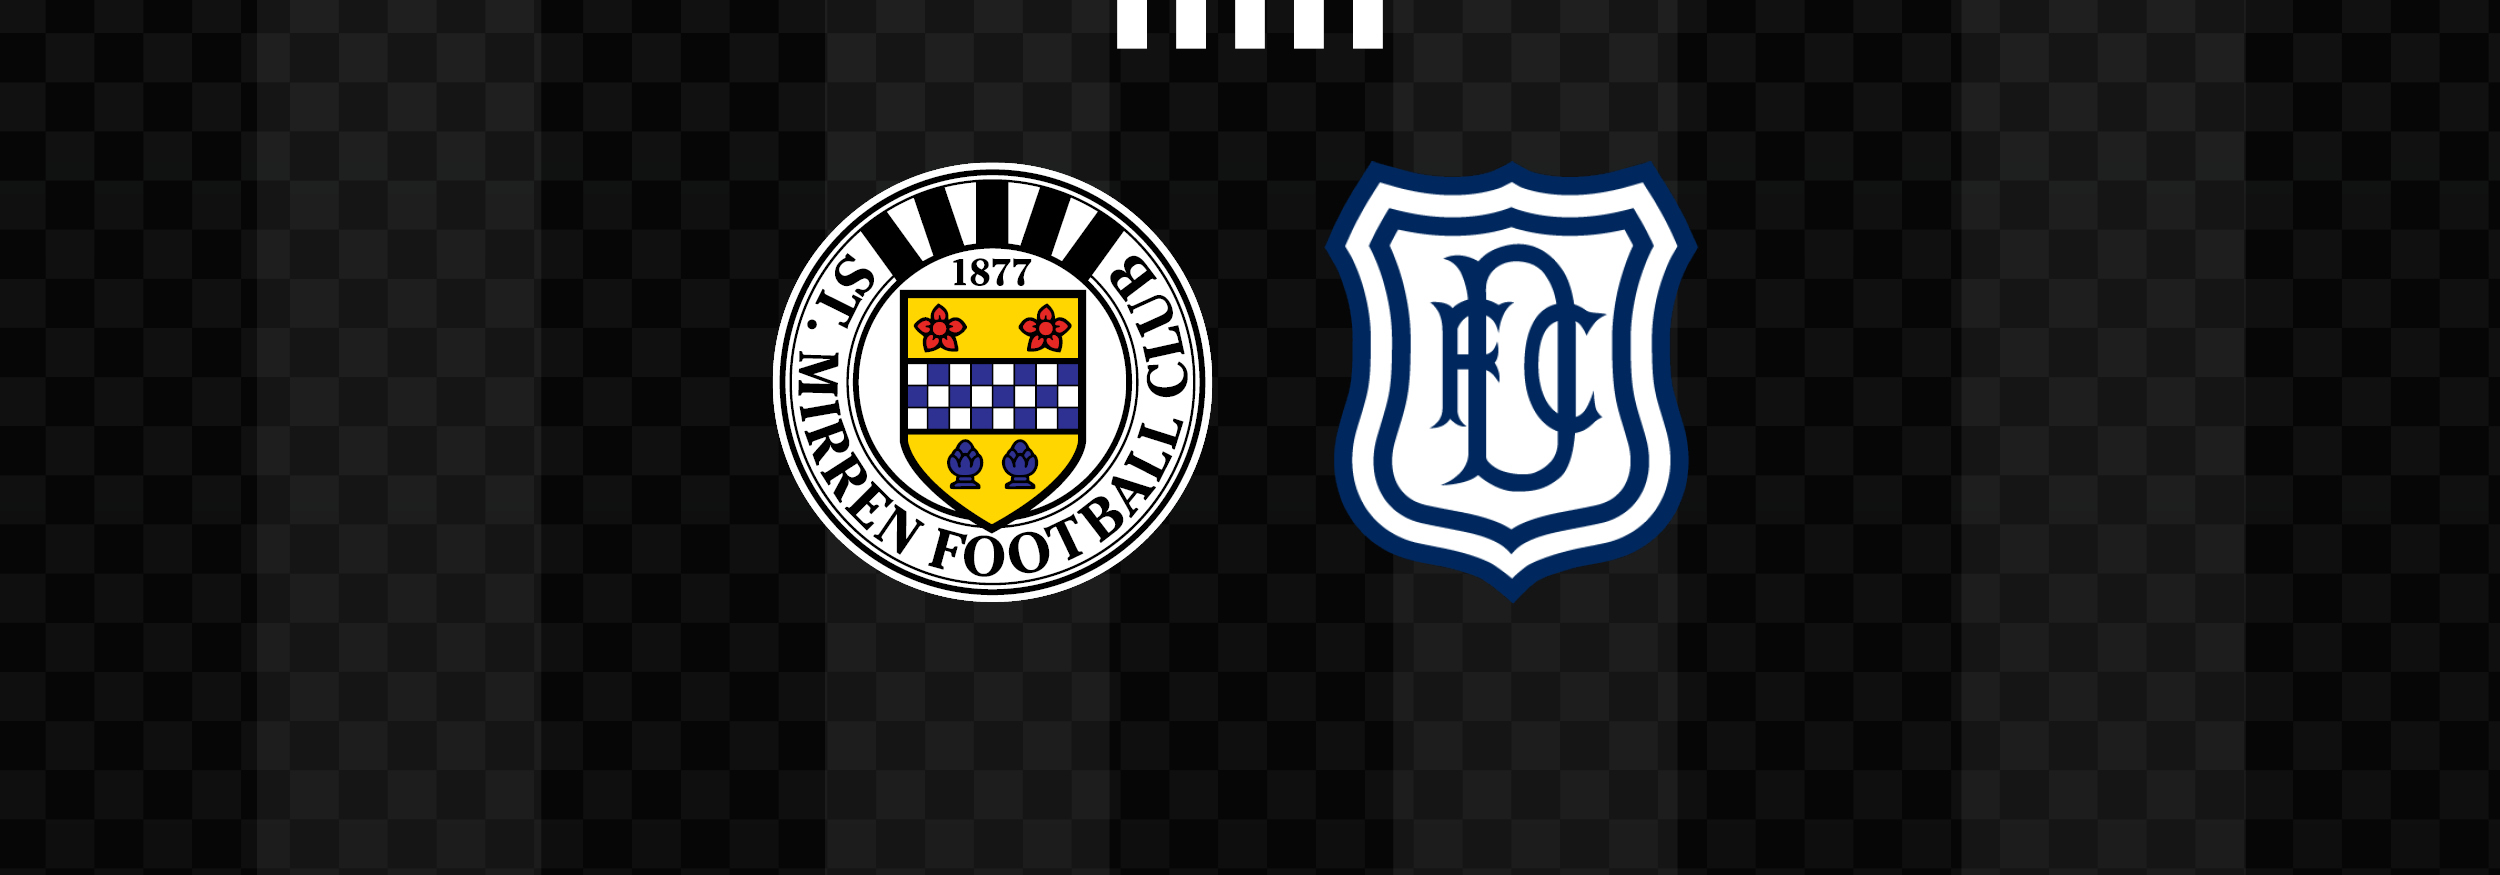 Matchday Info: St Mirren v Dundee (7th Feb)